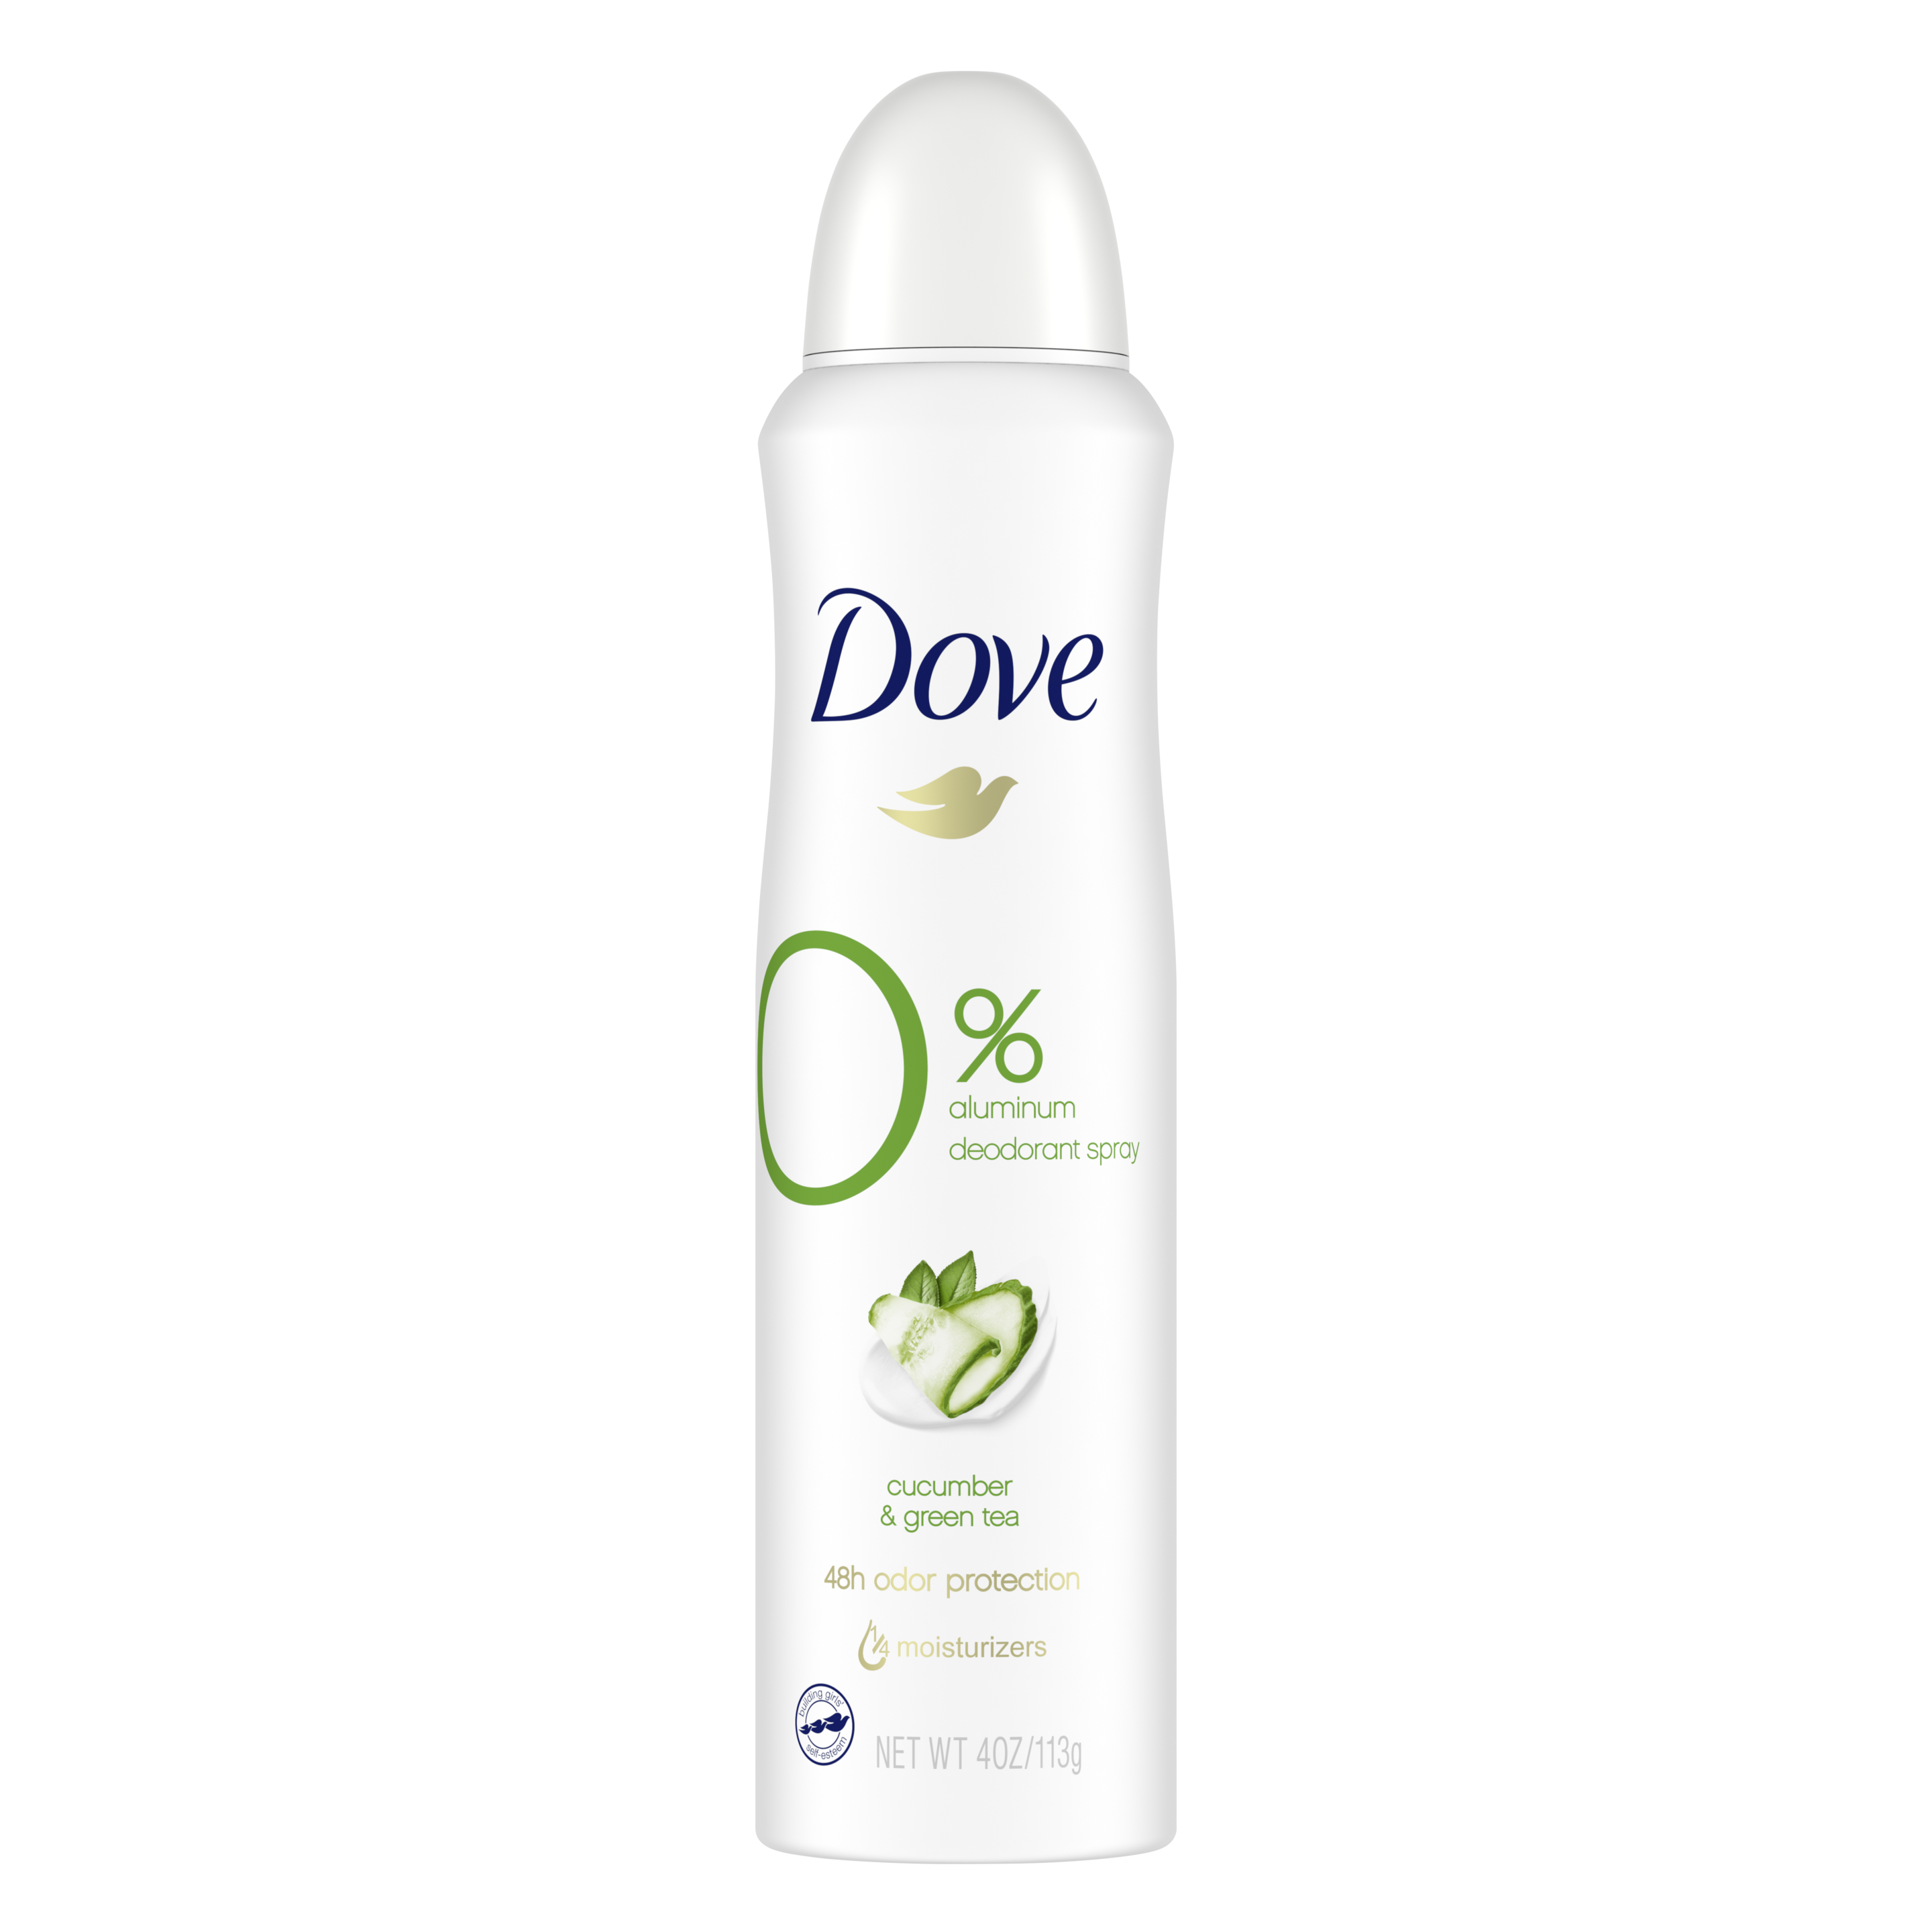 Dove 0% Aluminum Deodorant Spray Cucumber & Green Tea packshot